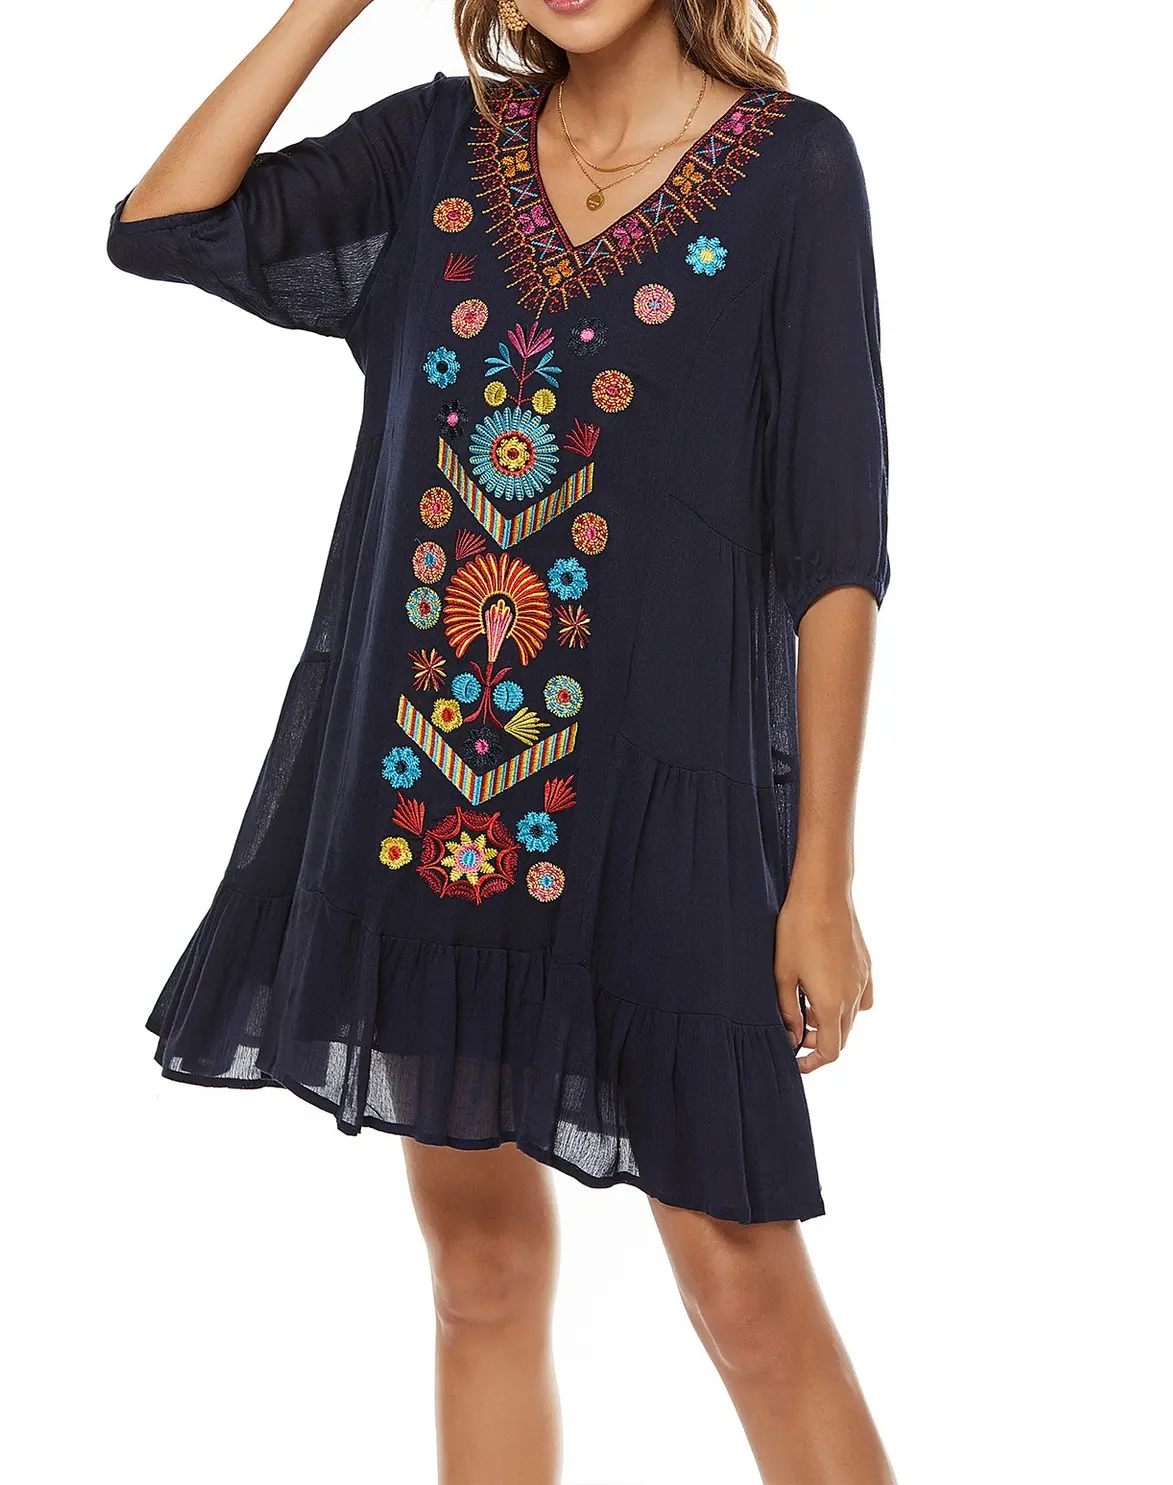 New custom casual chiffon dress short sleeve V-neck embroidered dress